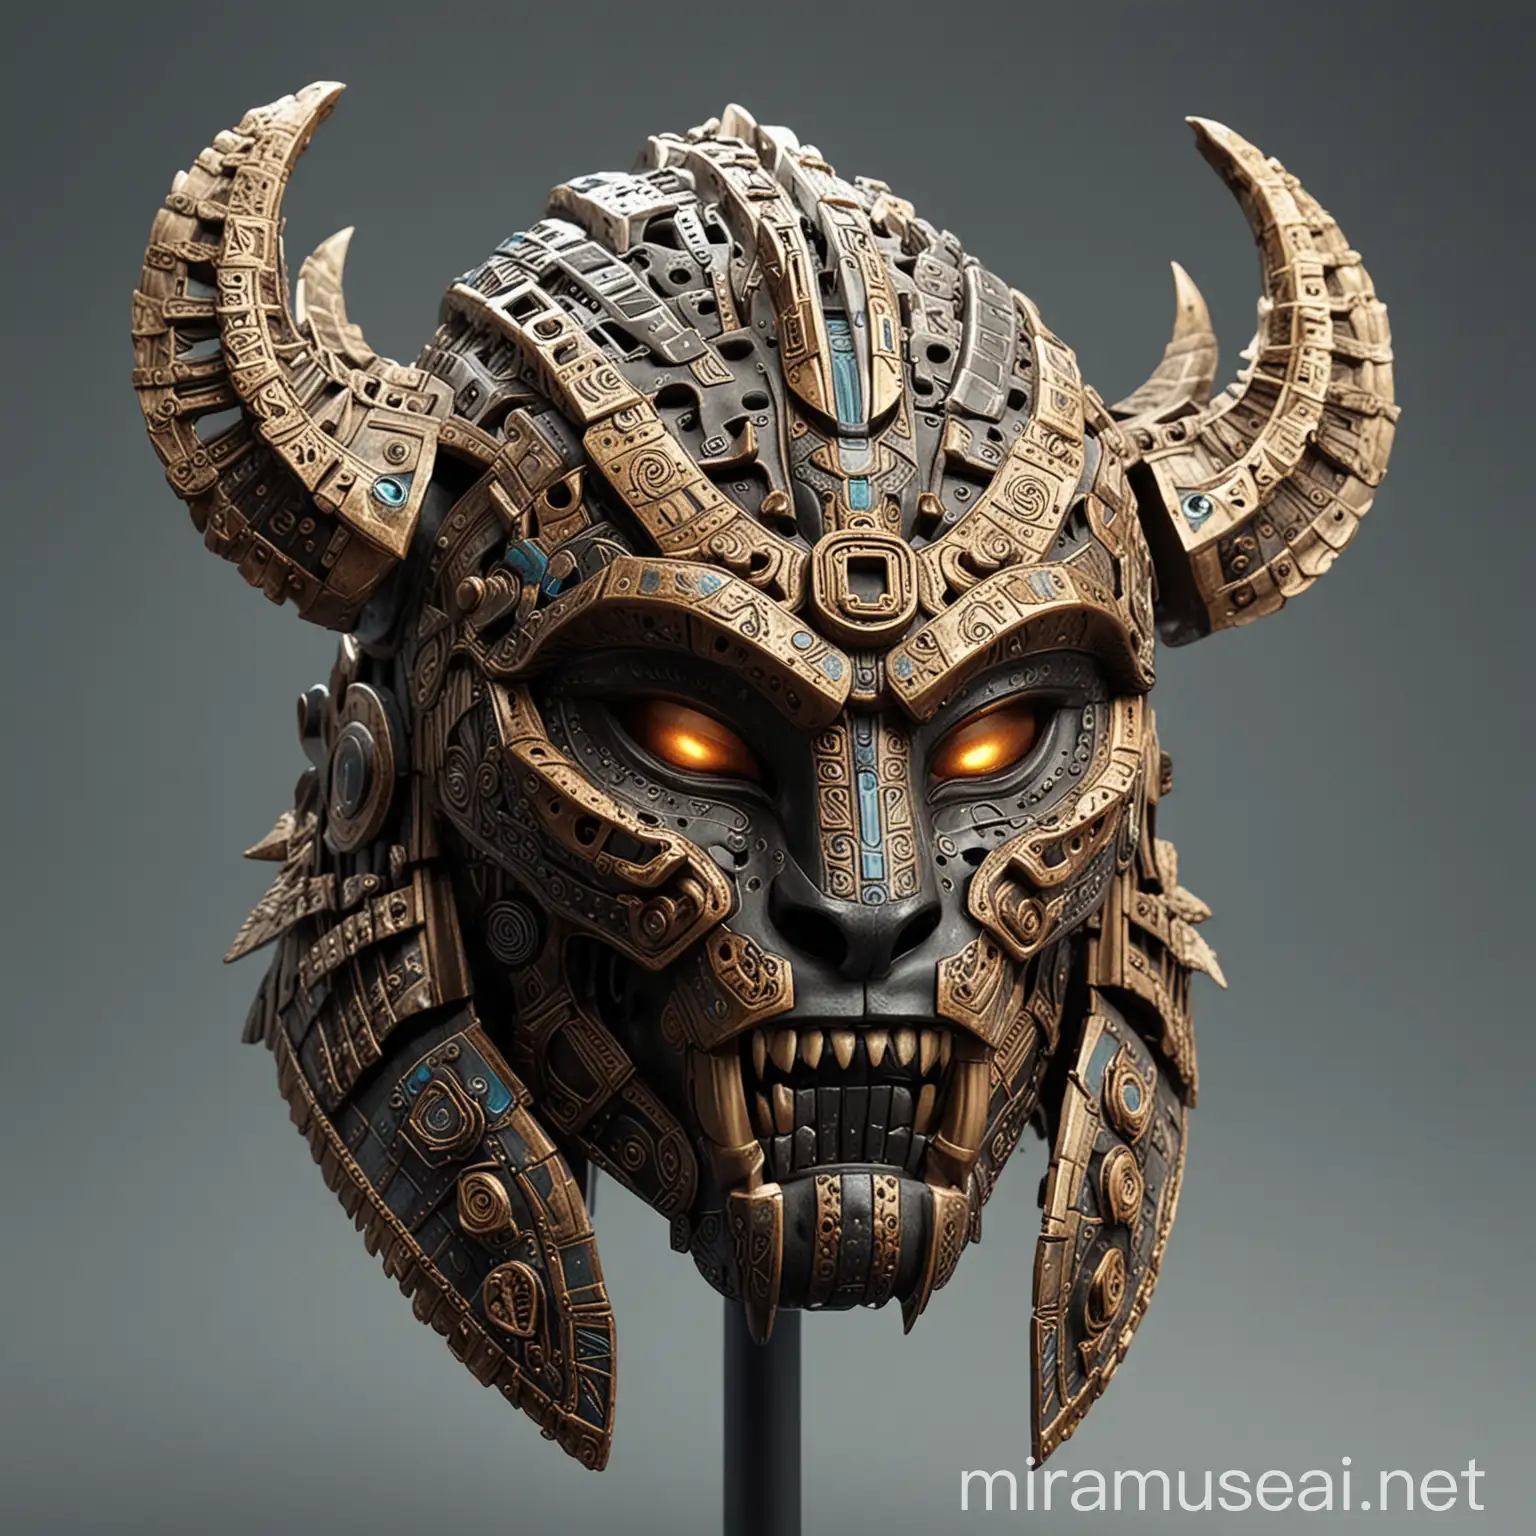 A helmet of an Aztec jaguar warrior with futuristic details. Fearsome fangs